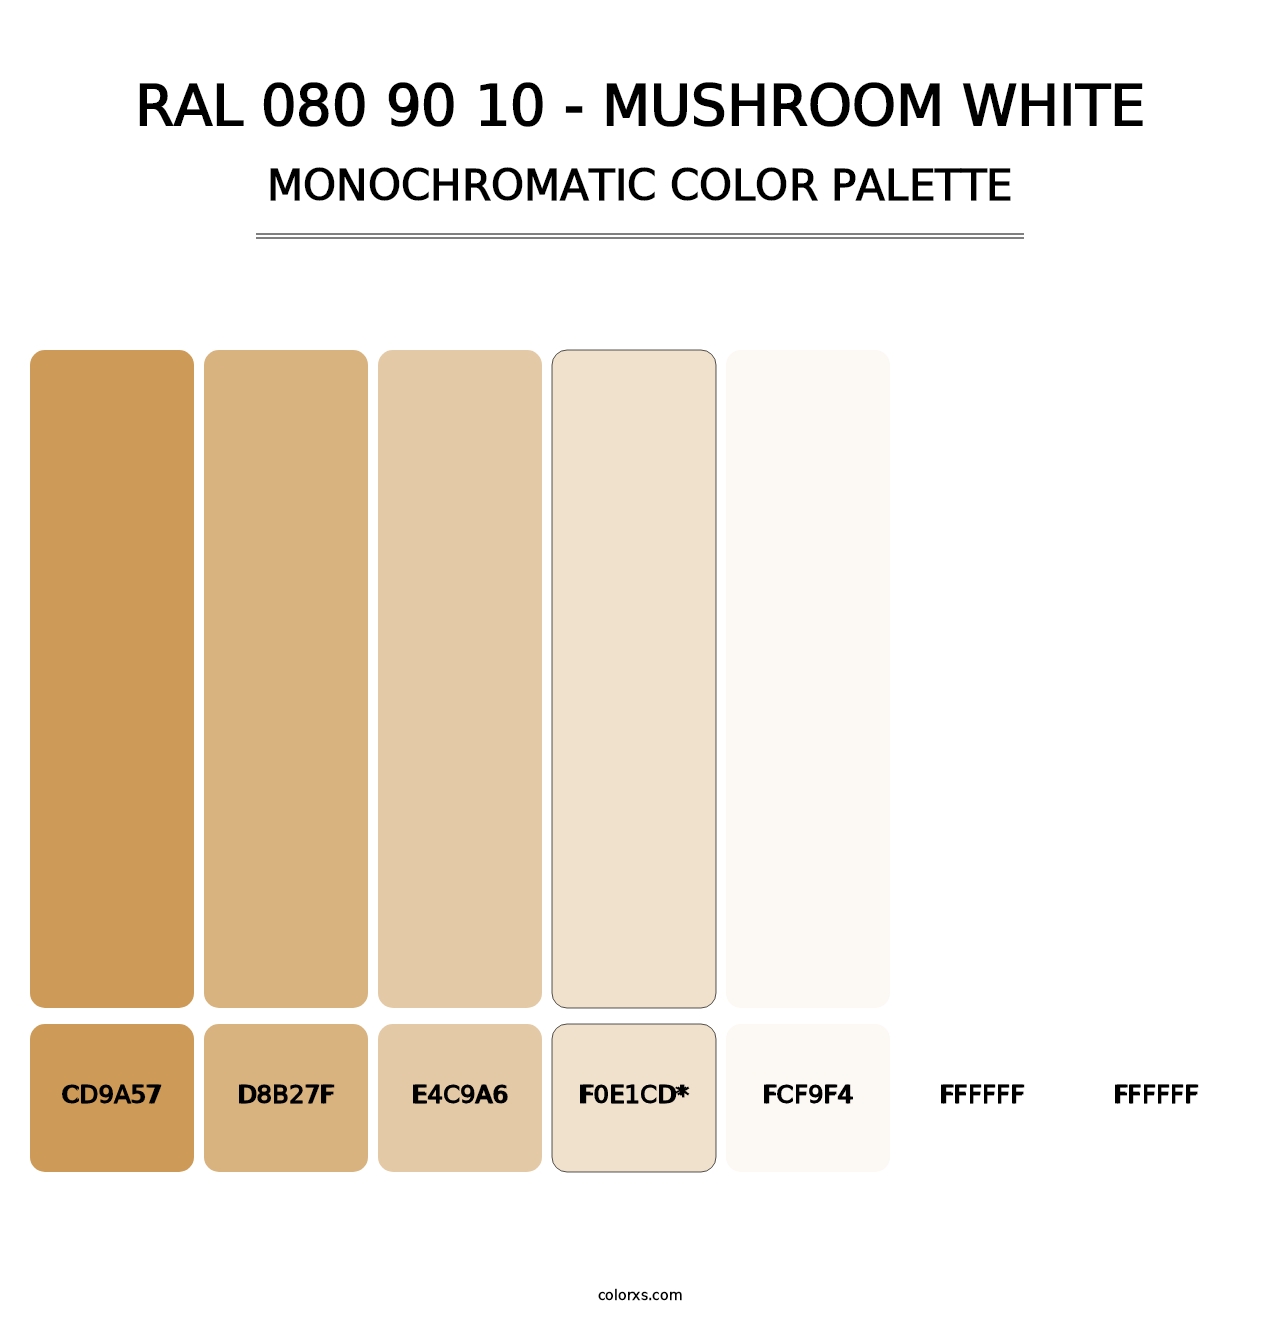 RAL 080 90 10 - Mushroom White - Monochromatic Color Palette